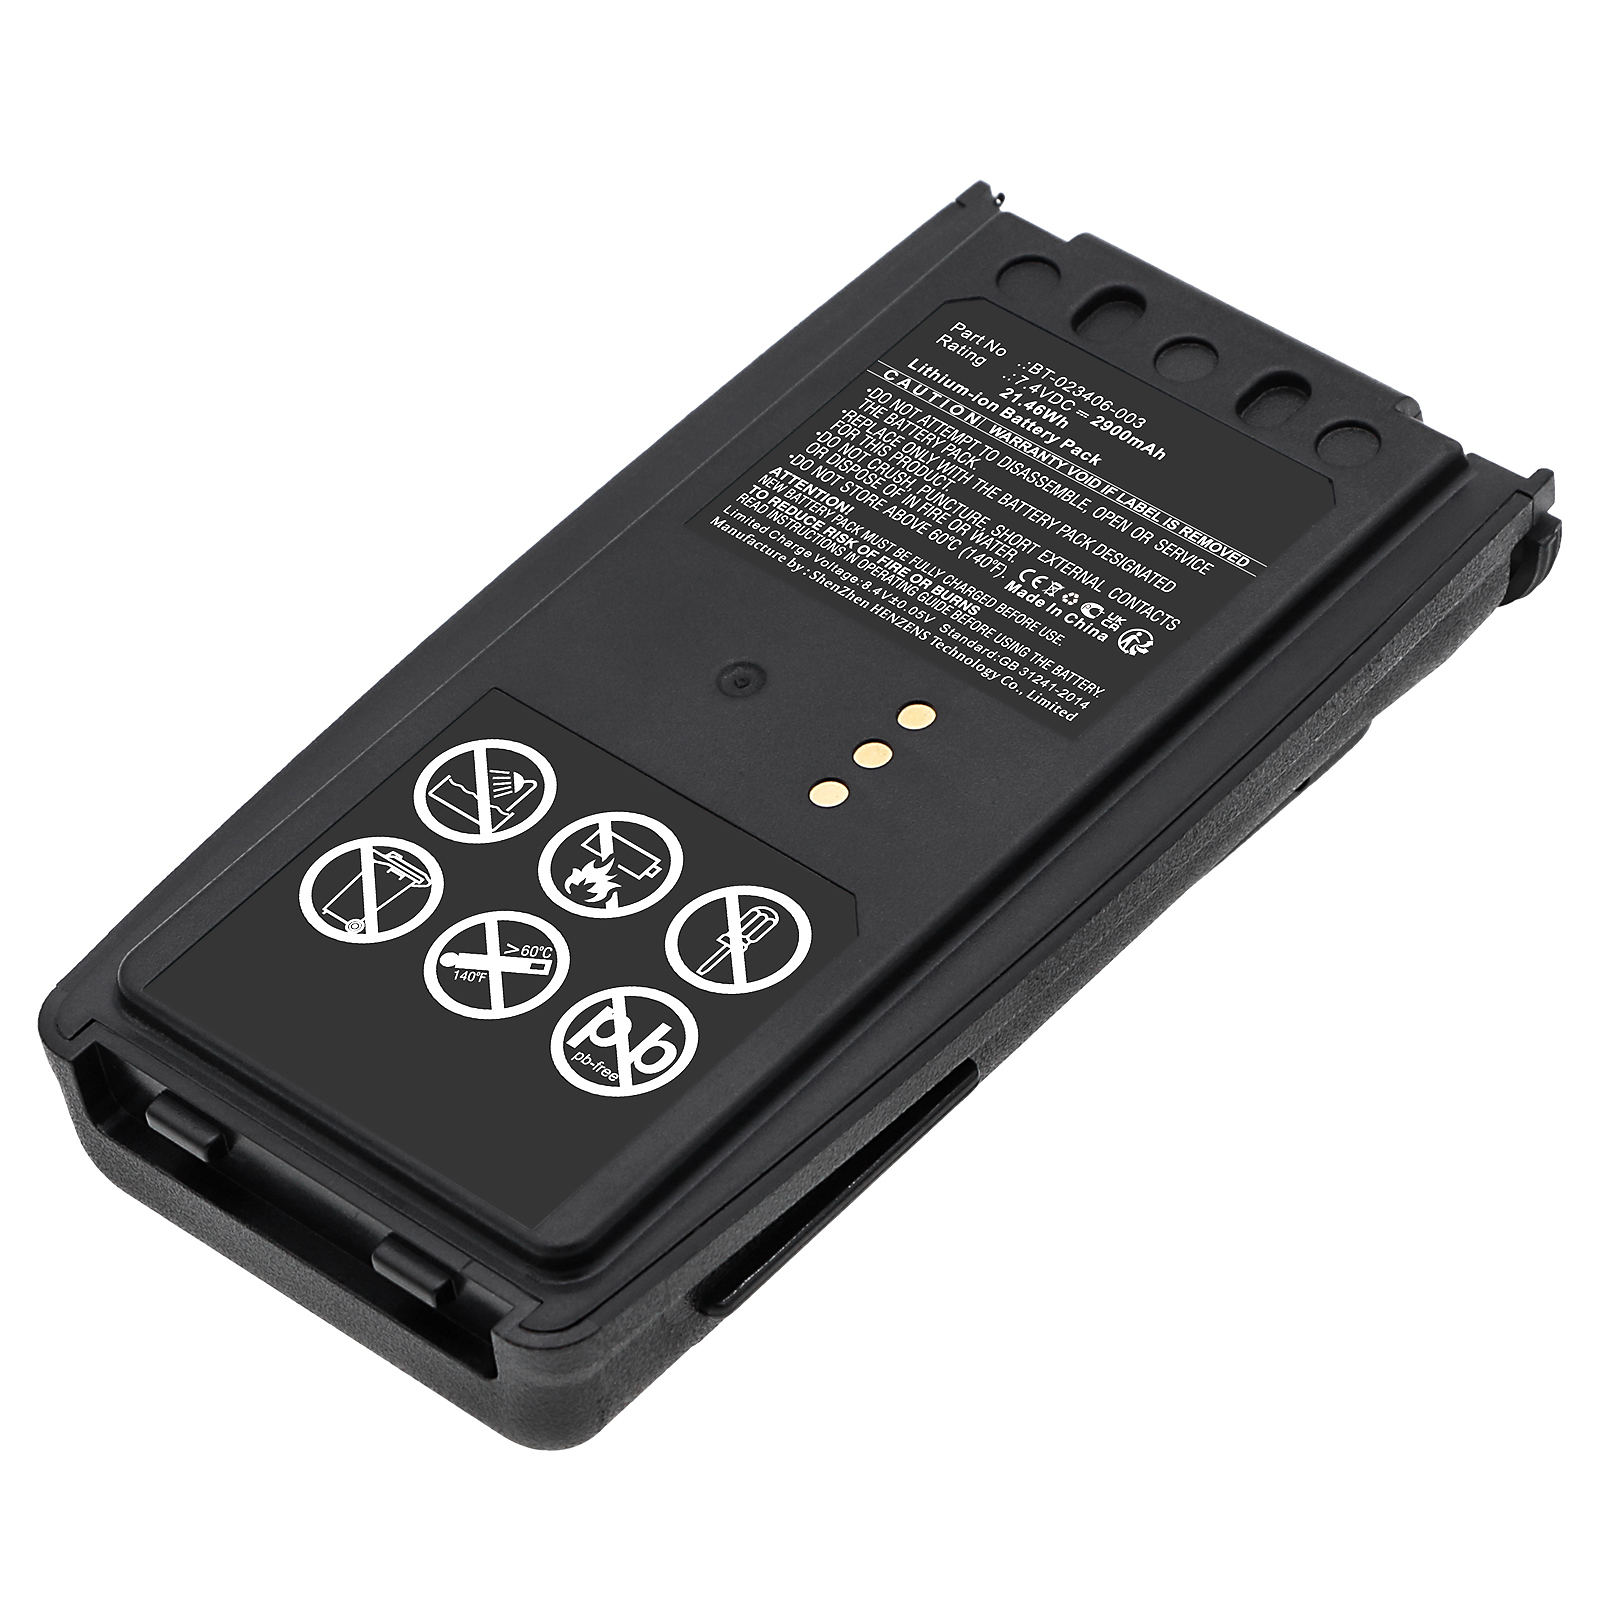 Synergy Digital 2-Way Radio Battery, Compatible with Harris BT-023406-003 2-Way Radio Battery (Li-ion, 7.4V, 2900mAh)